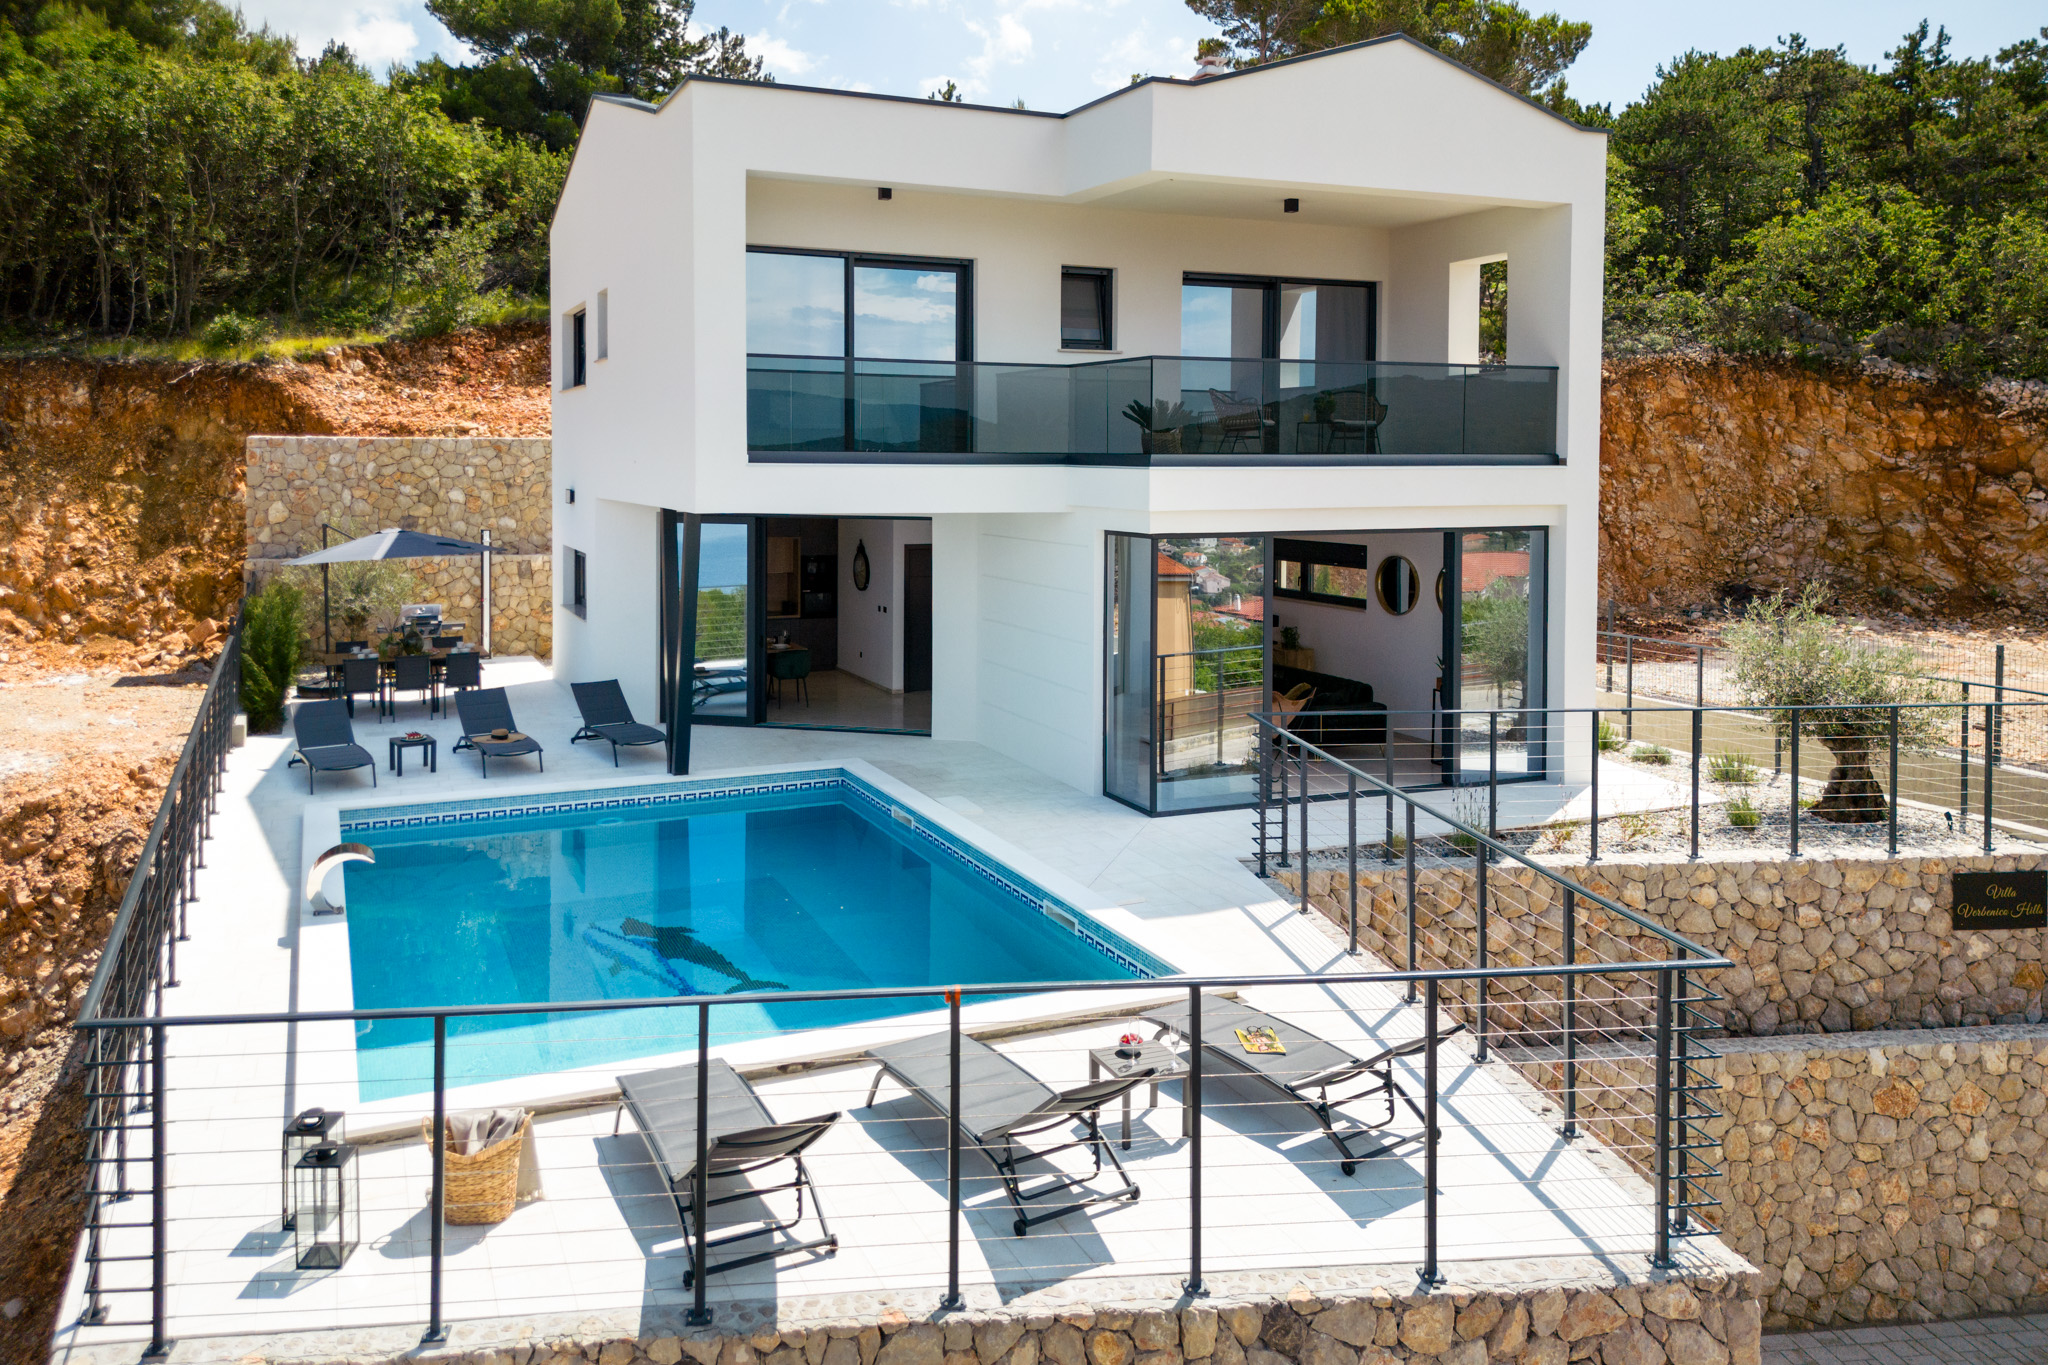 Luxury sea view villa, pool with jacuzzi, beach, famous wine region